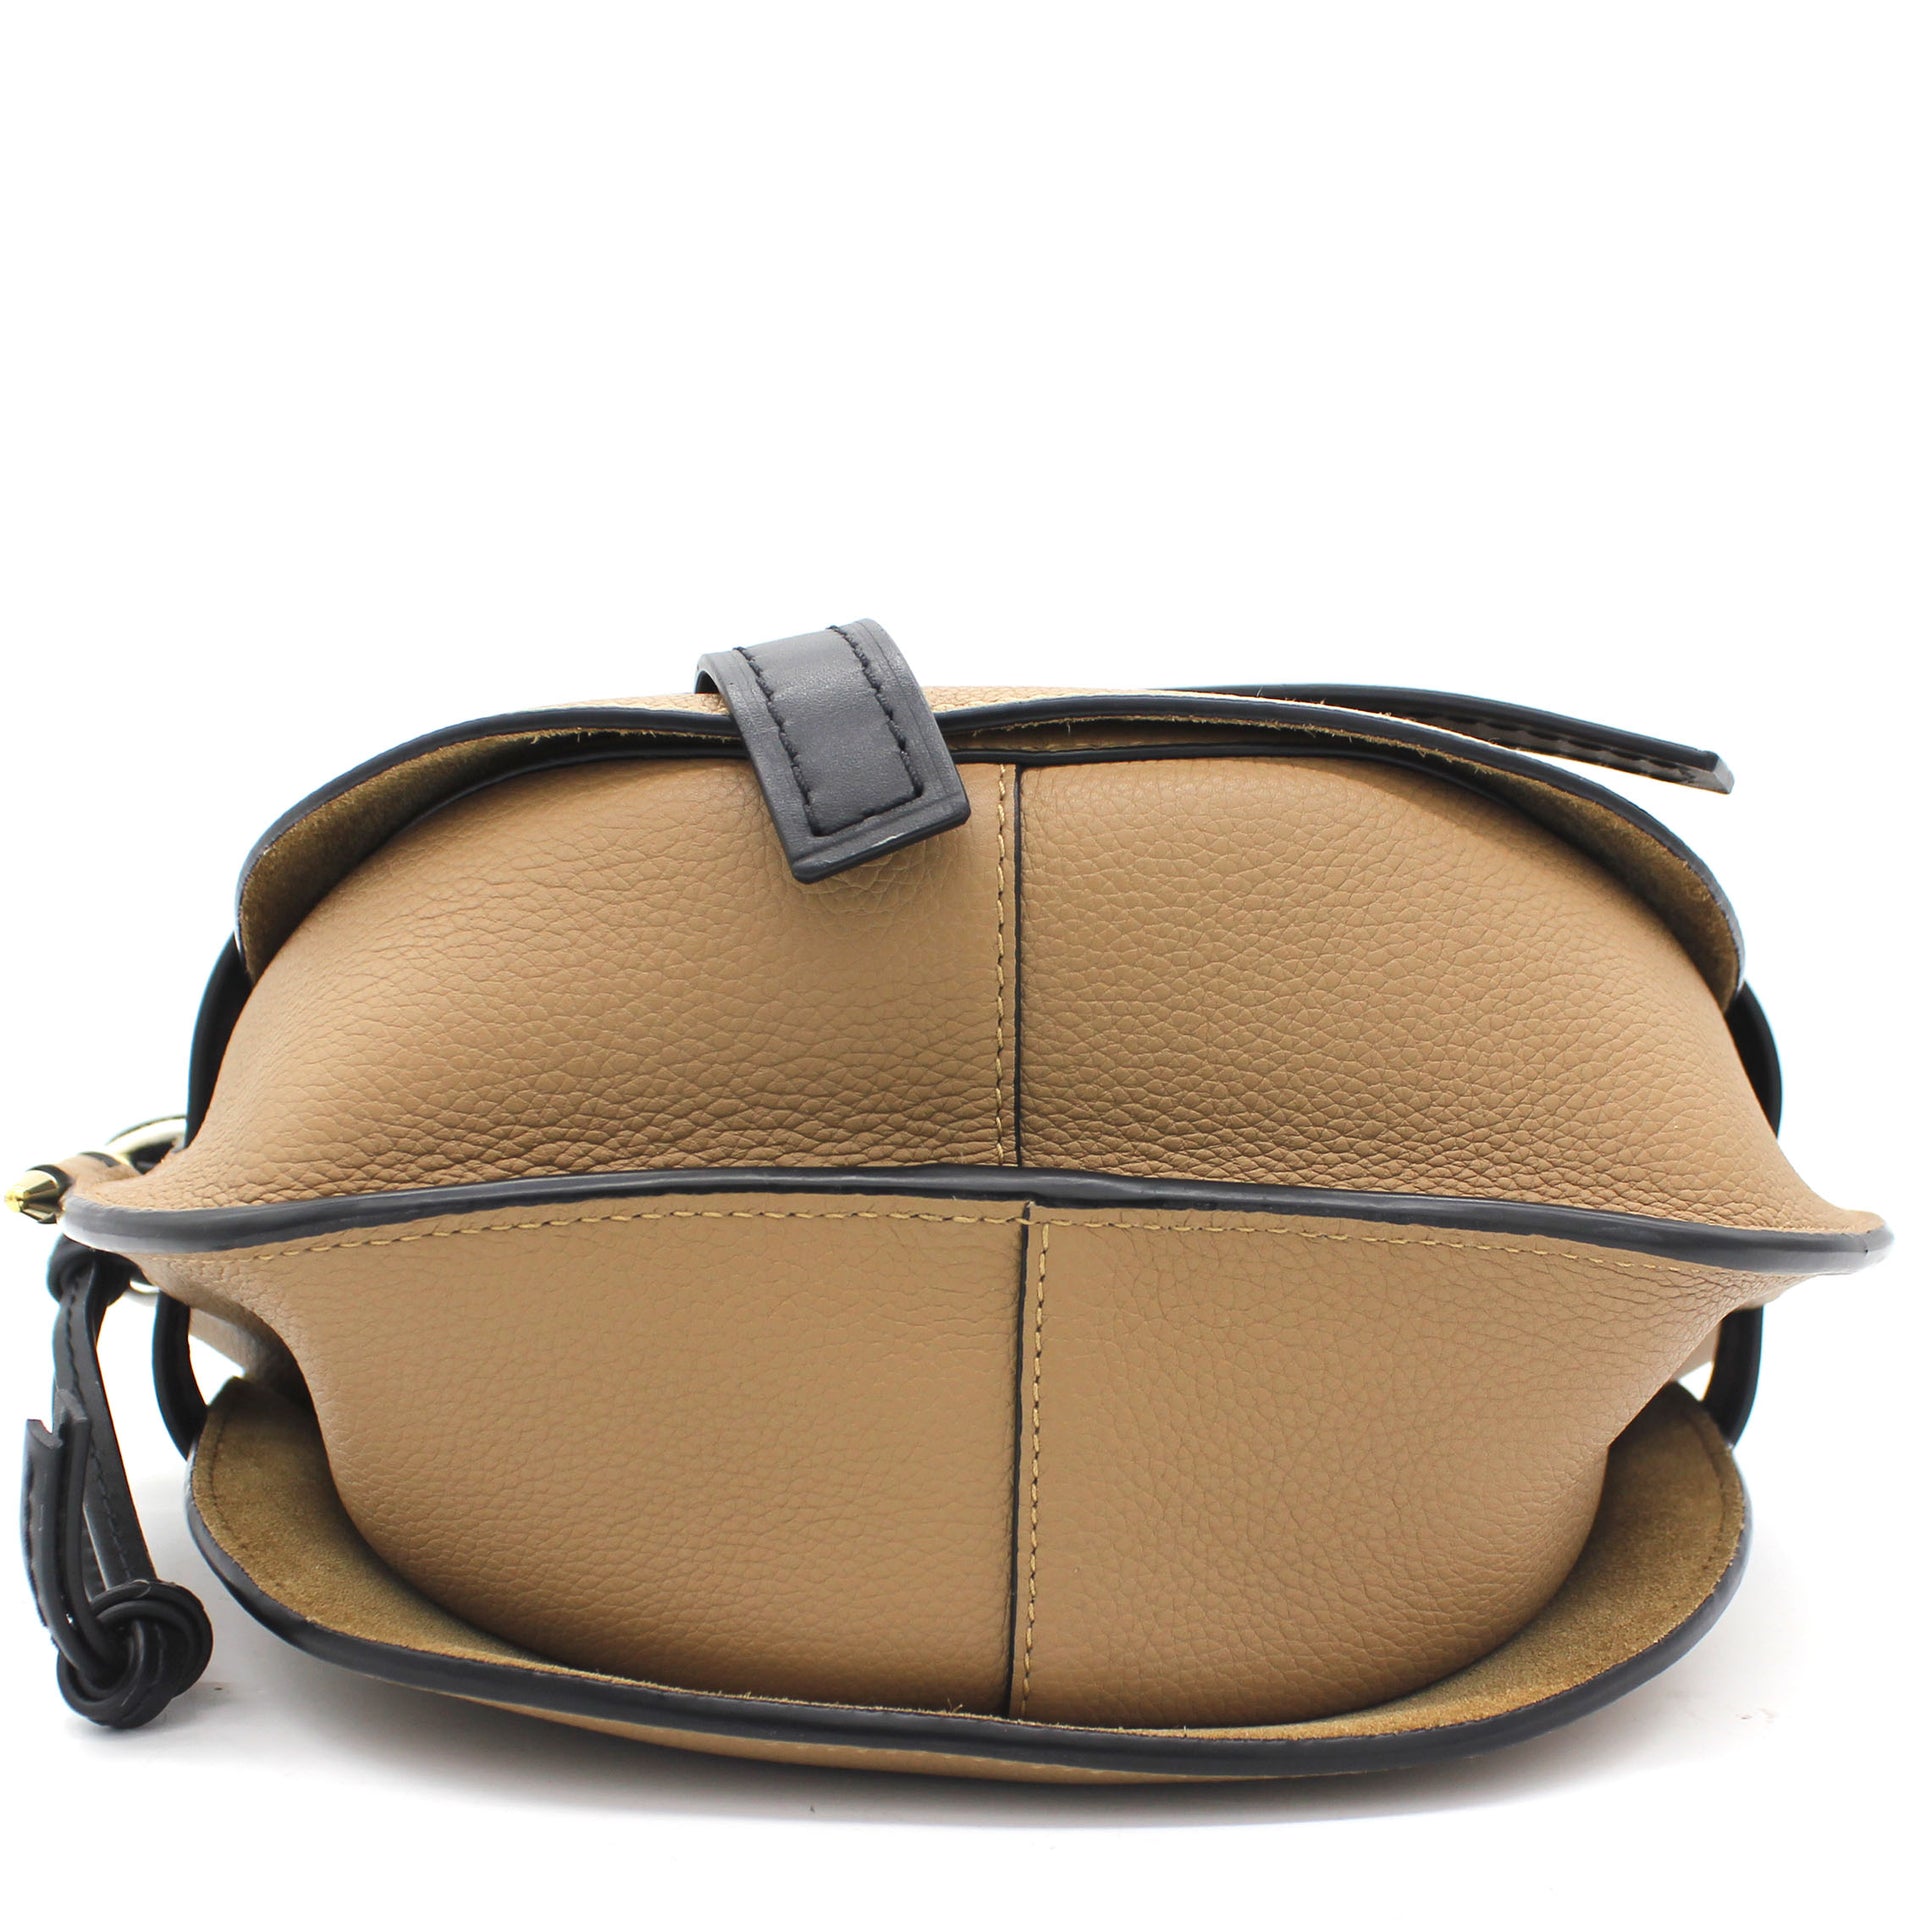 Genuine Loewe Leather Clutch Handbag With Coin Purse Beige off 